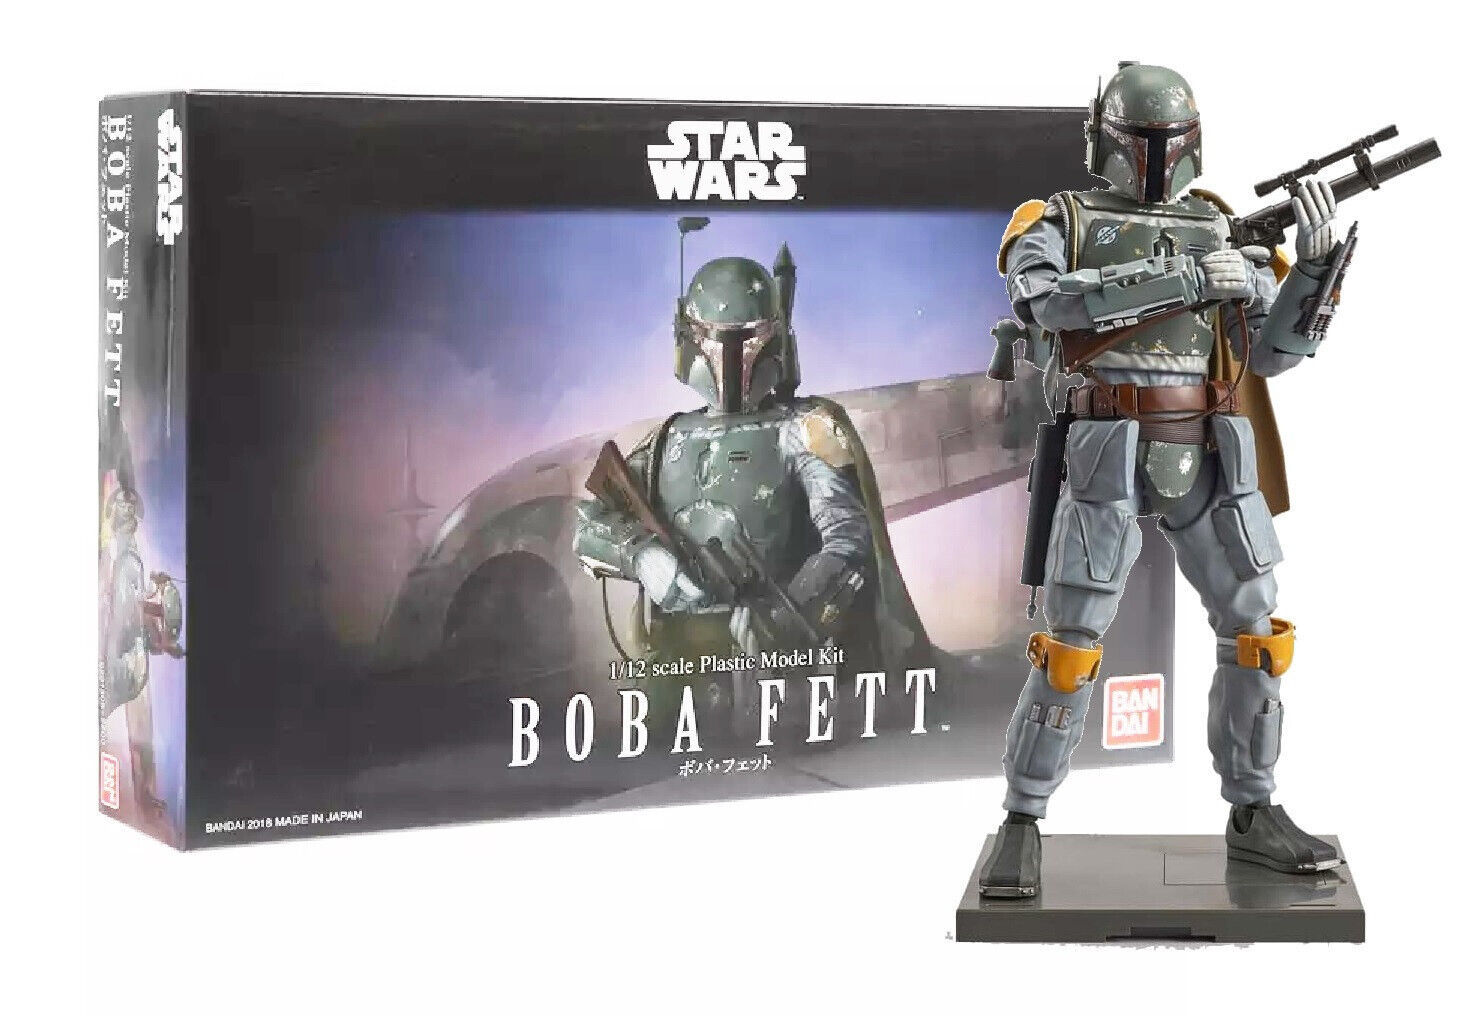 Primary image for Bandai Star Wars Boba Fett 1/12 Scale Model Kit New in Box